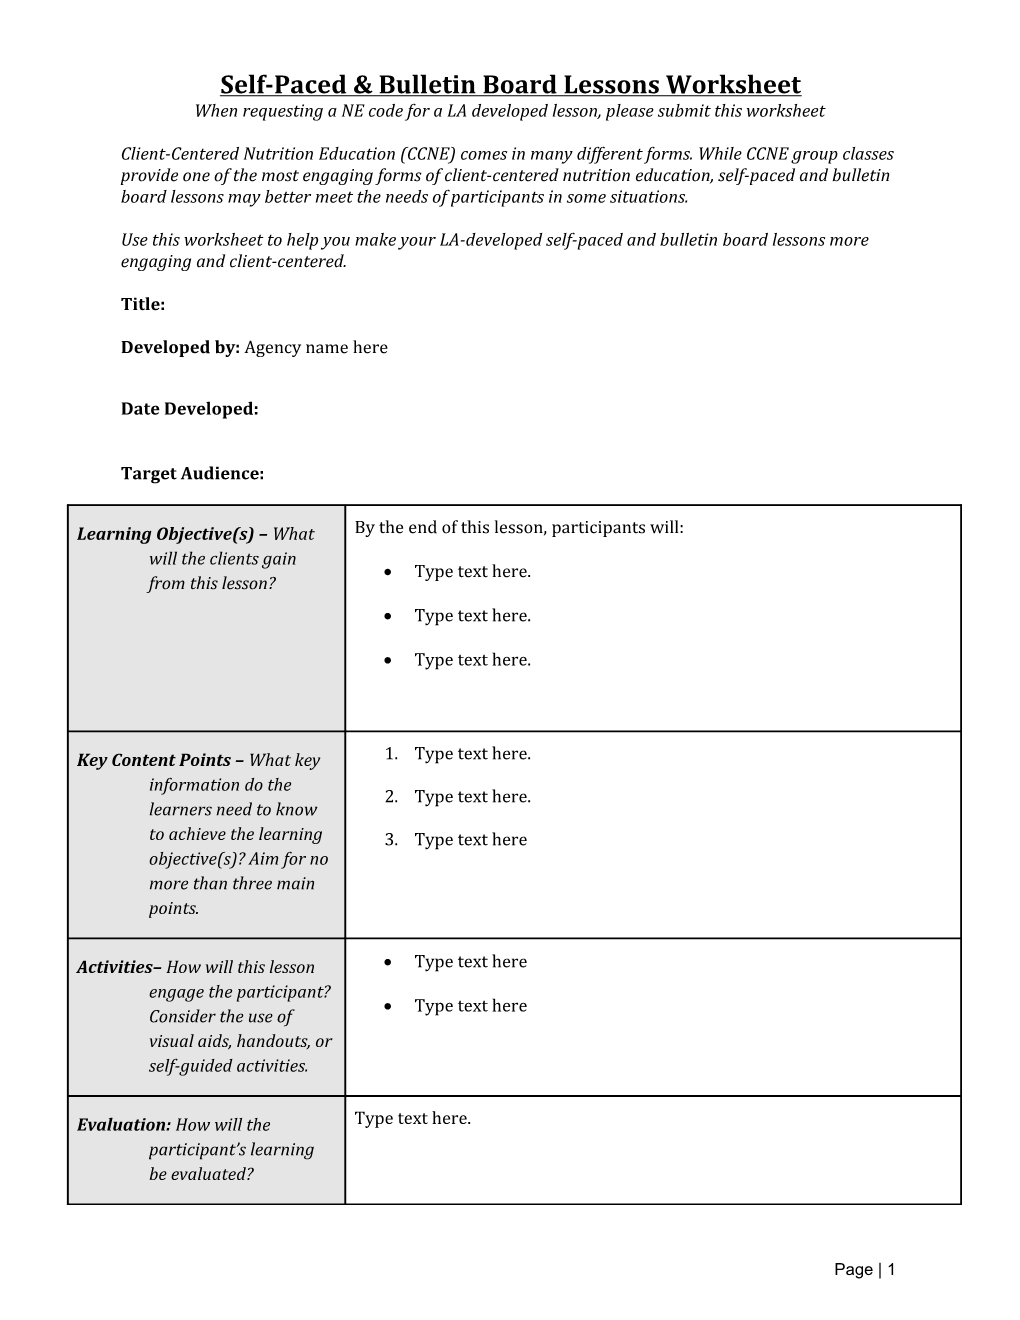 Self-Paced Bulletin Board Lessonsworksheet